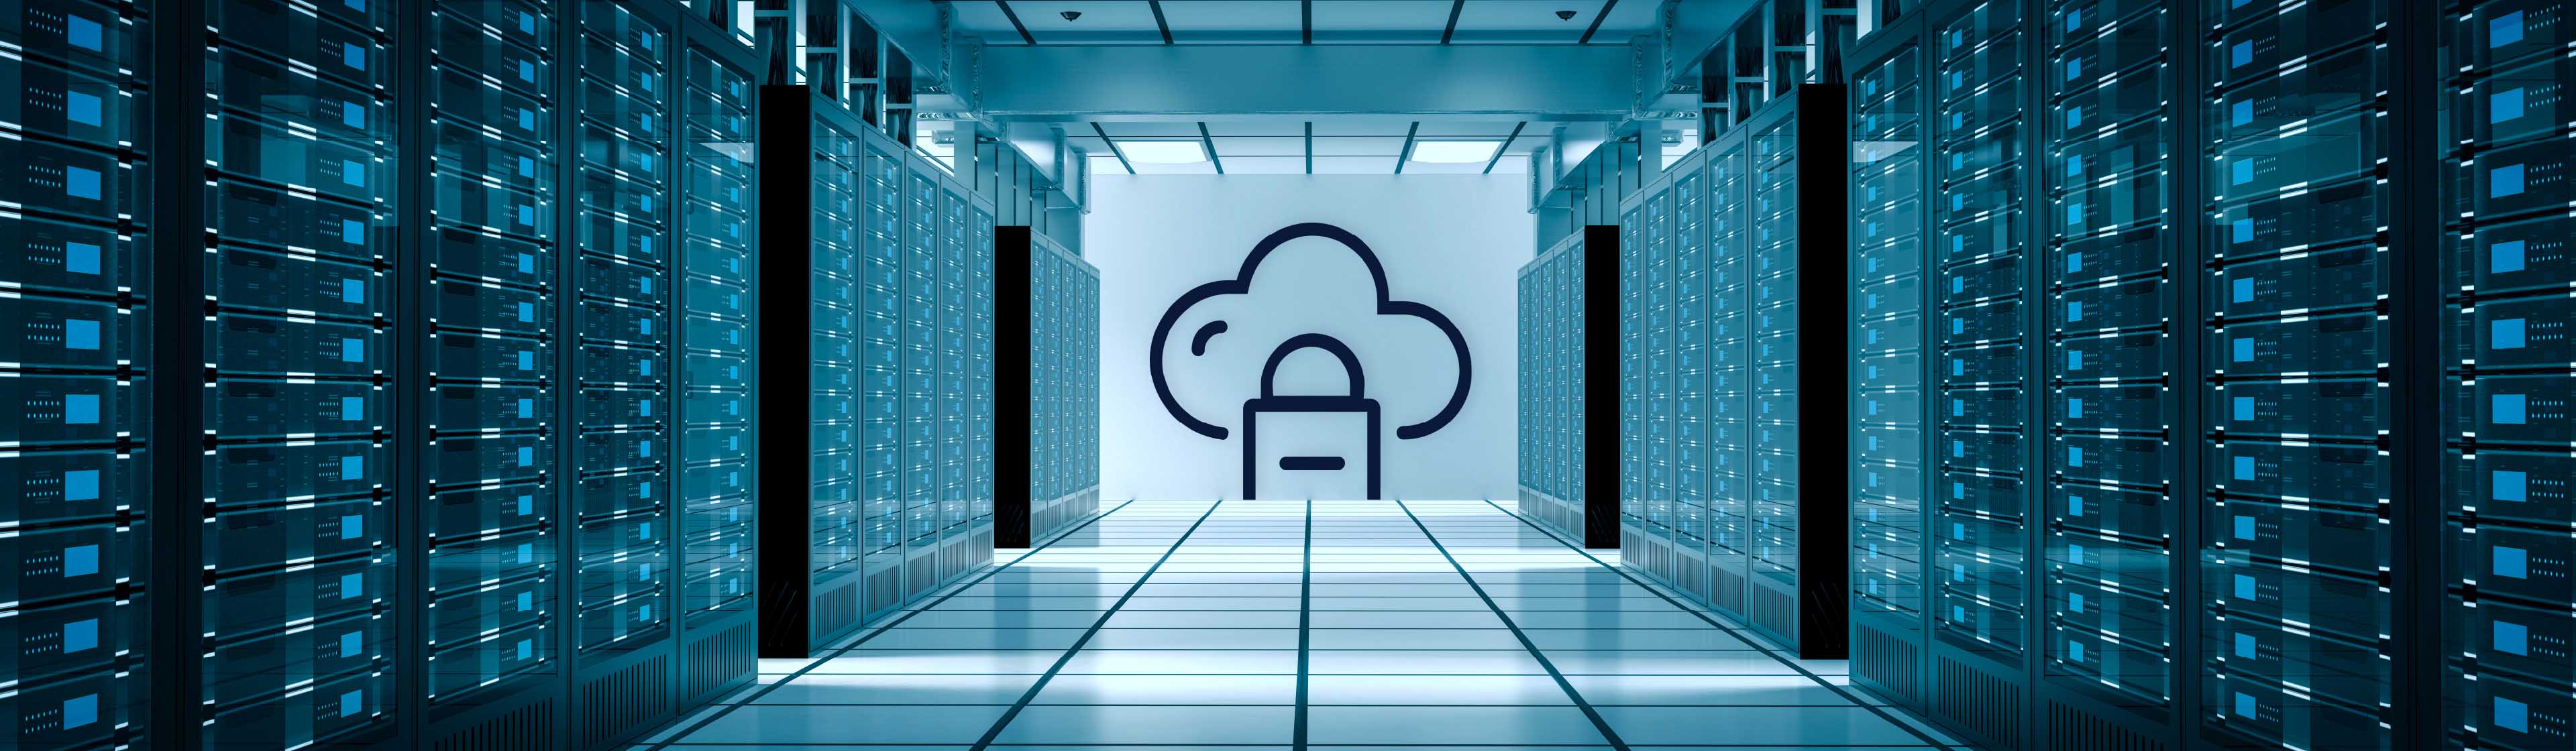 A cloud icon with a lock amongst server racks